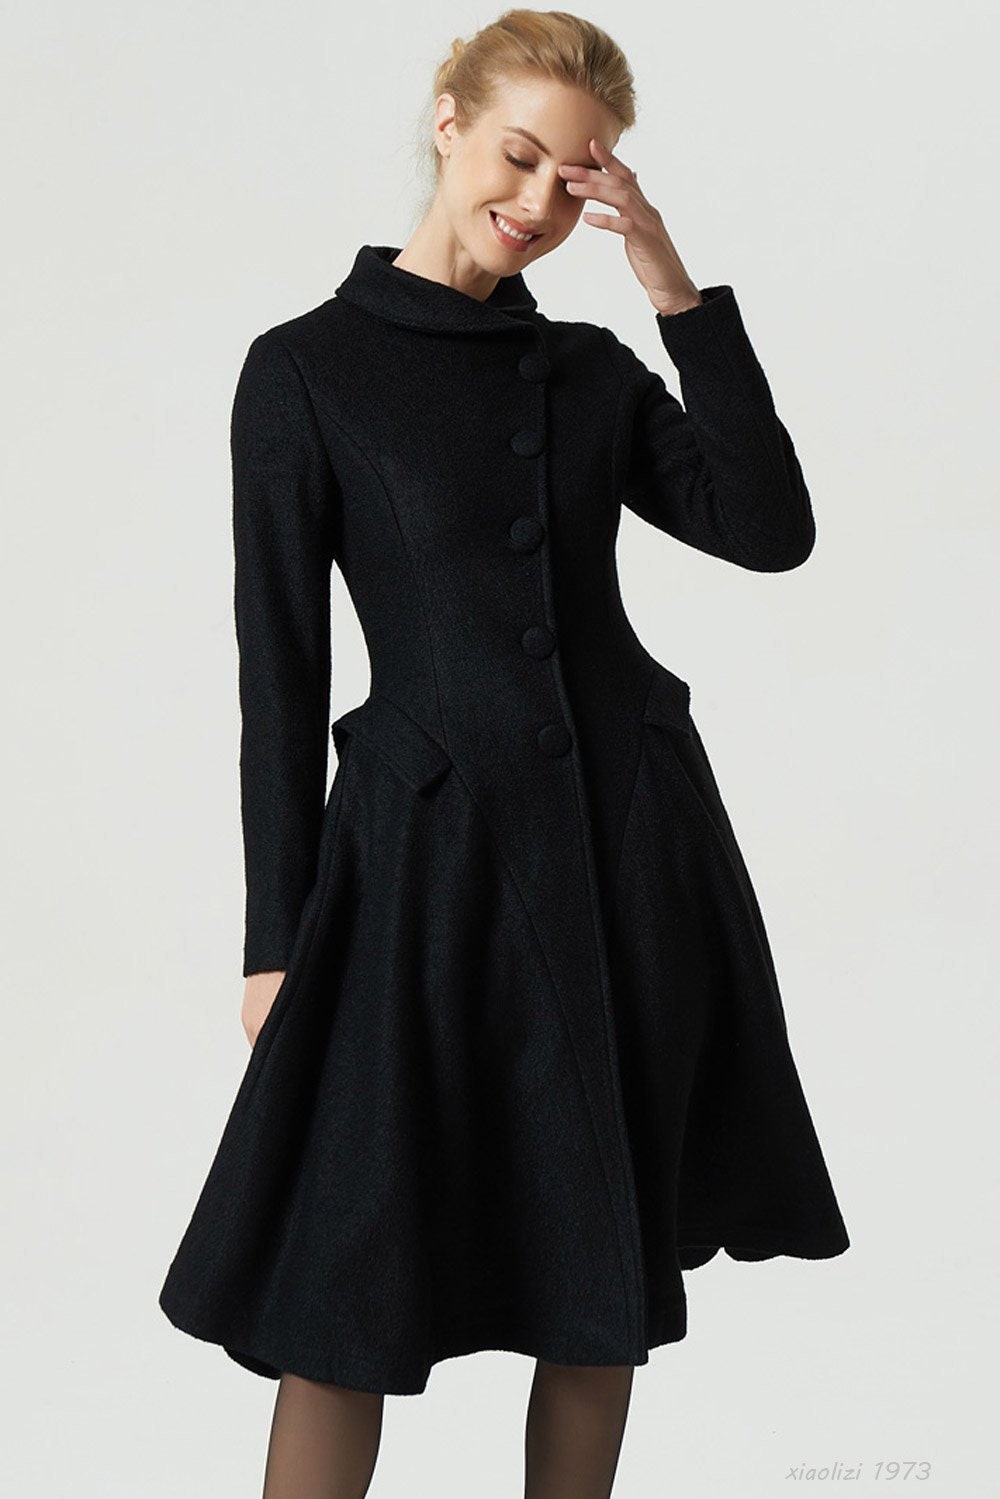 Vintage inspired Swing coat Black wool coat wool coat women | Etsy